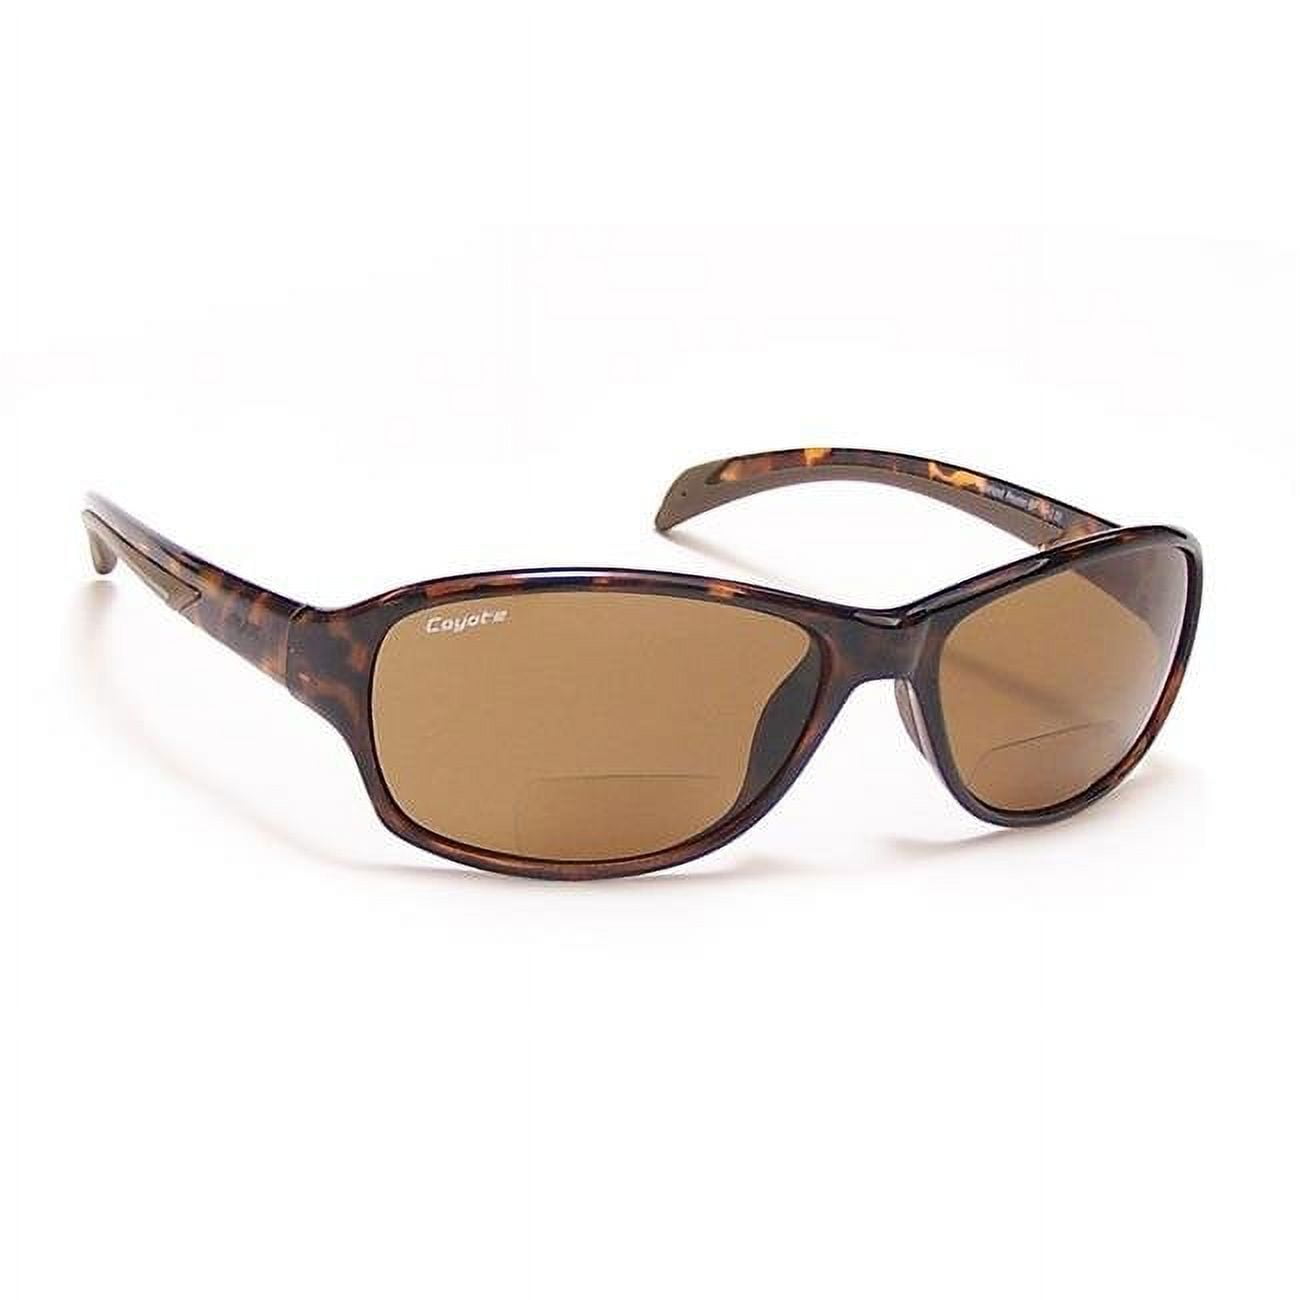 Coyote Eyewear BP-14 +1.50 Polarized Reader Premium Sunglasses, Tortoise & Brown